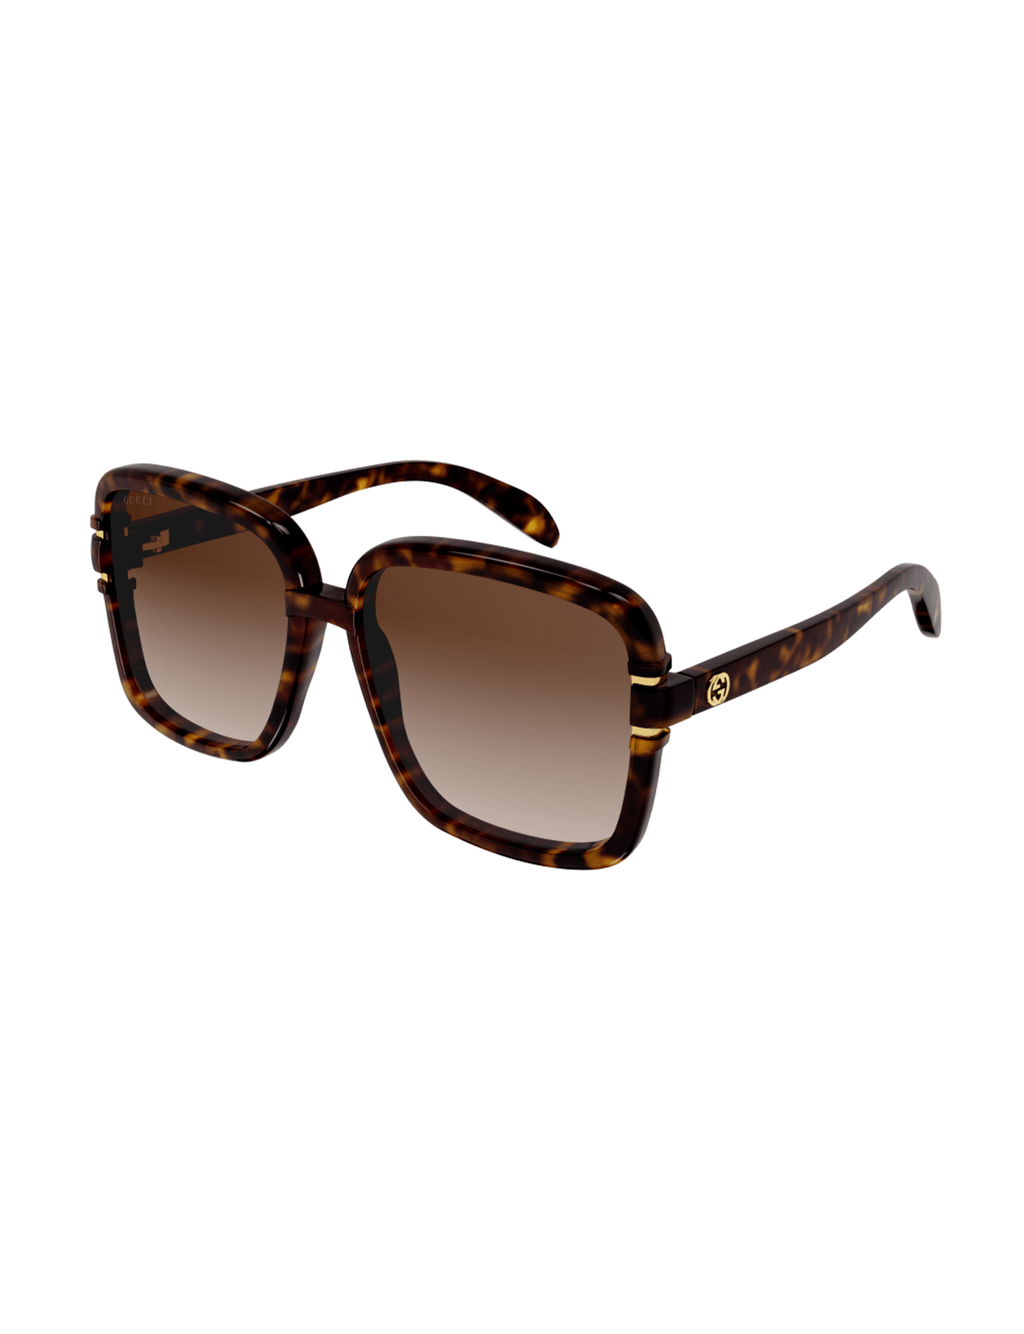 Retro Square Sunglasses, Tort/Brown